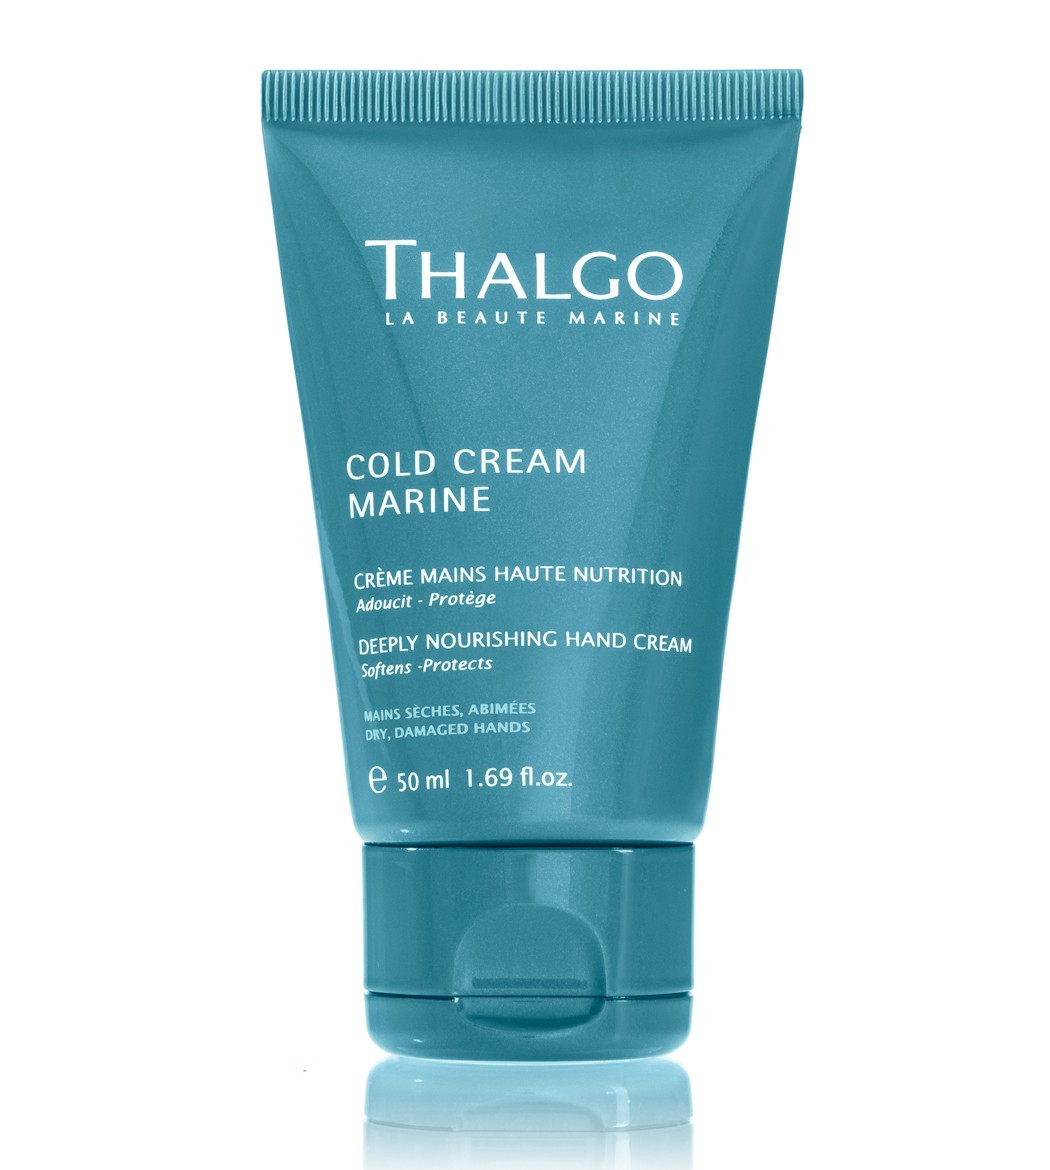 Інтенсивний живильний крем для рук Cold Cream Marine Deeply Nourishing Hand Cream Thalgo 50 мл — фото №1